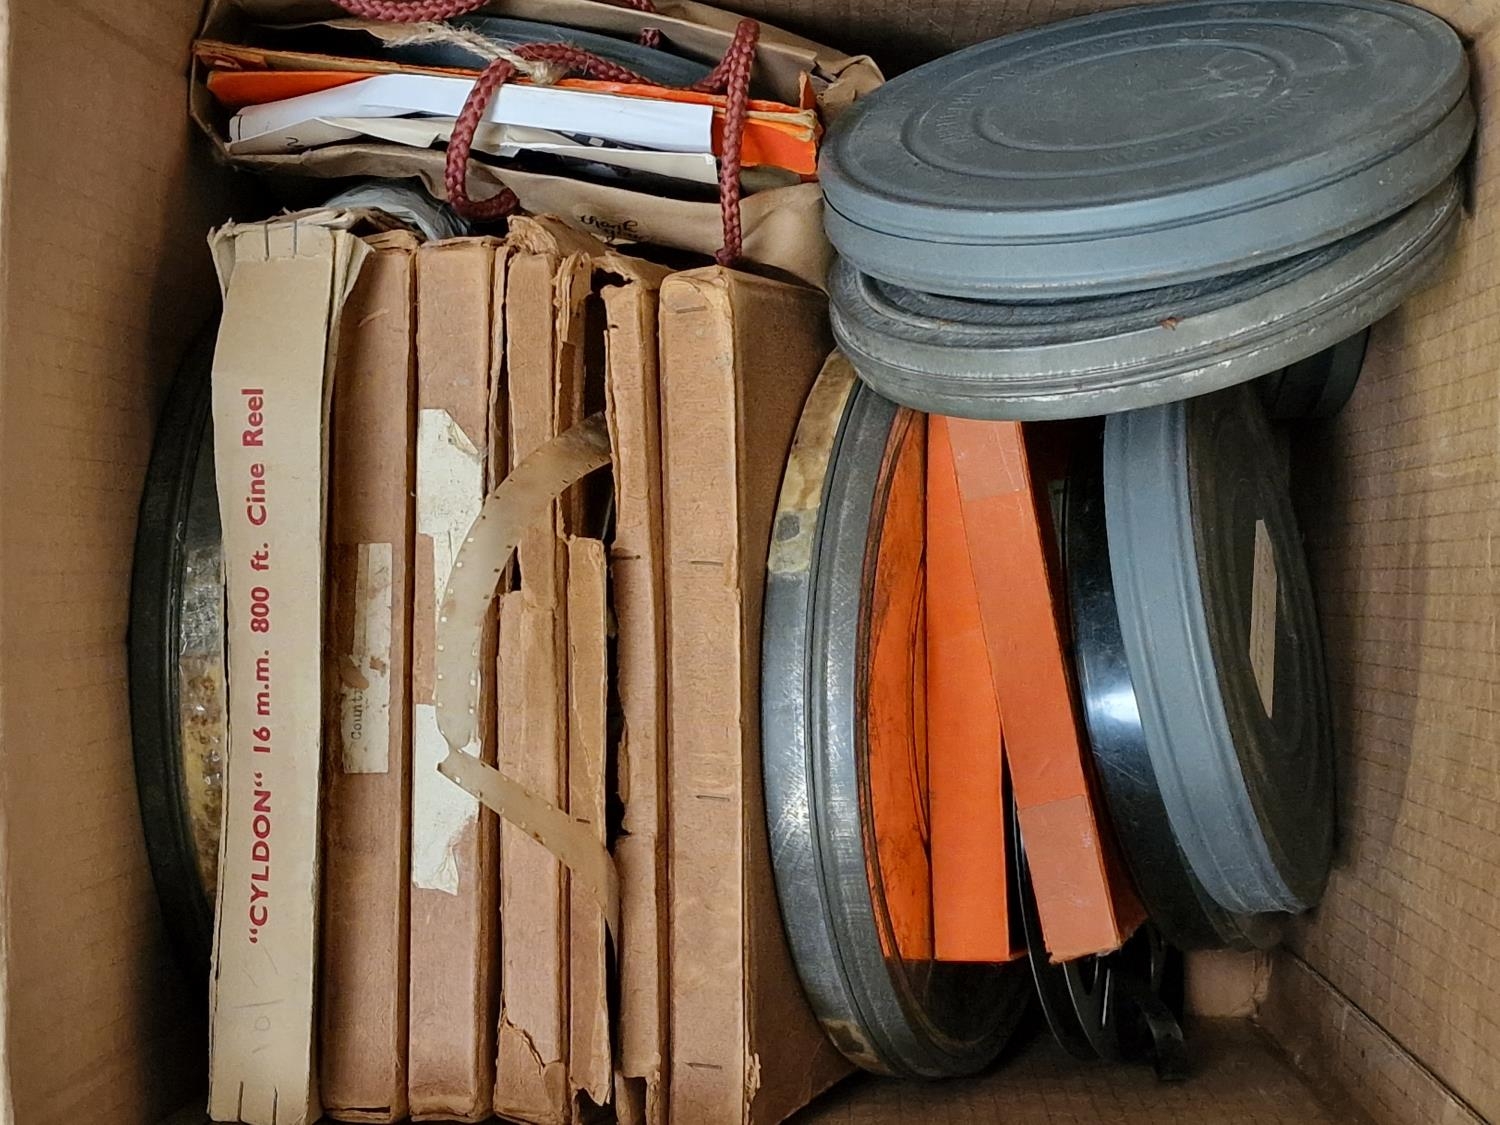 Quantity of Vintage 16/18mm cine film reel